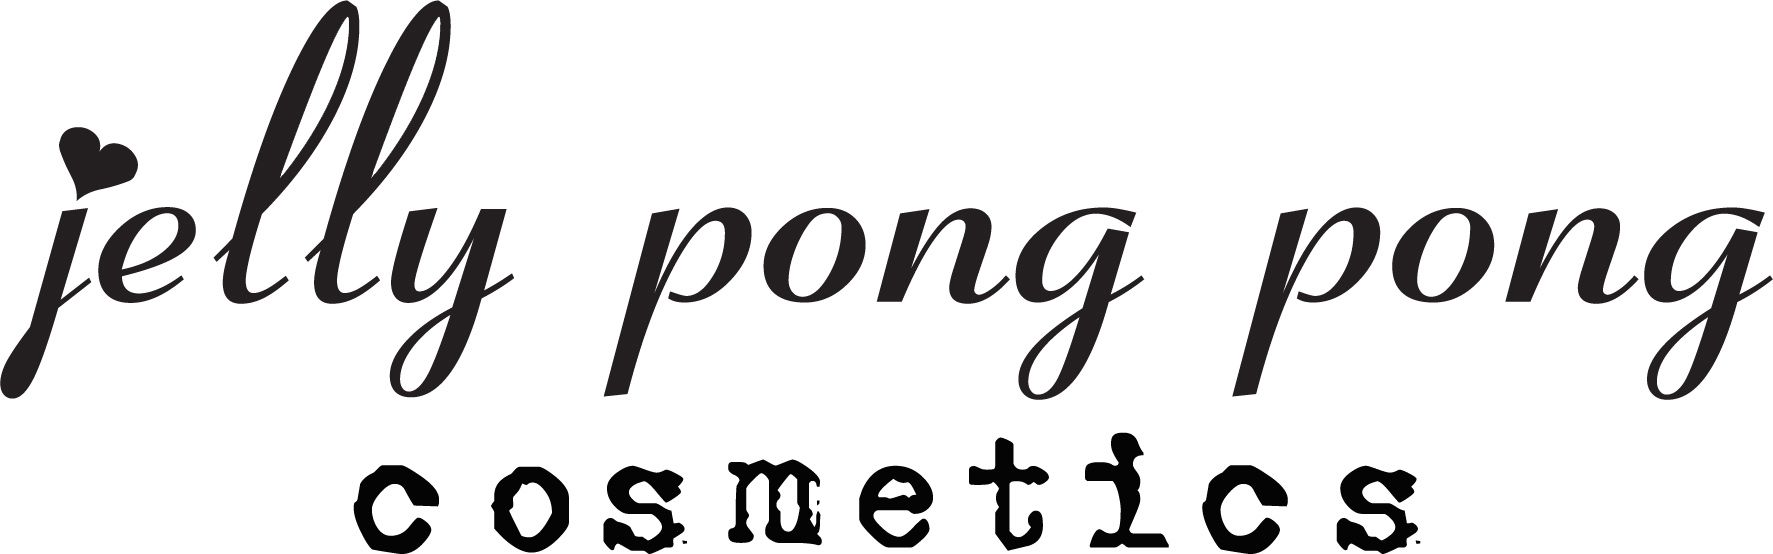 Jelly Pong Pong Cosmetics Logo